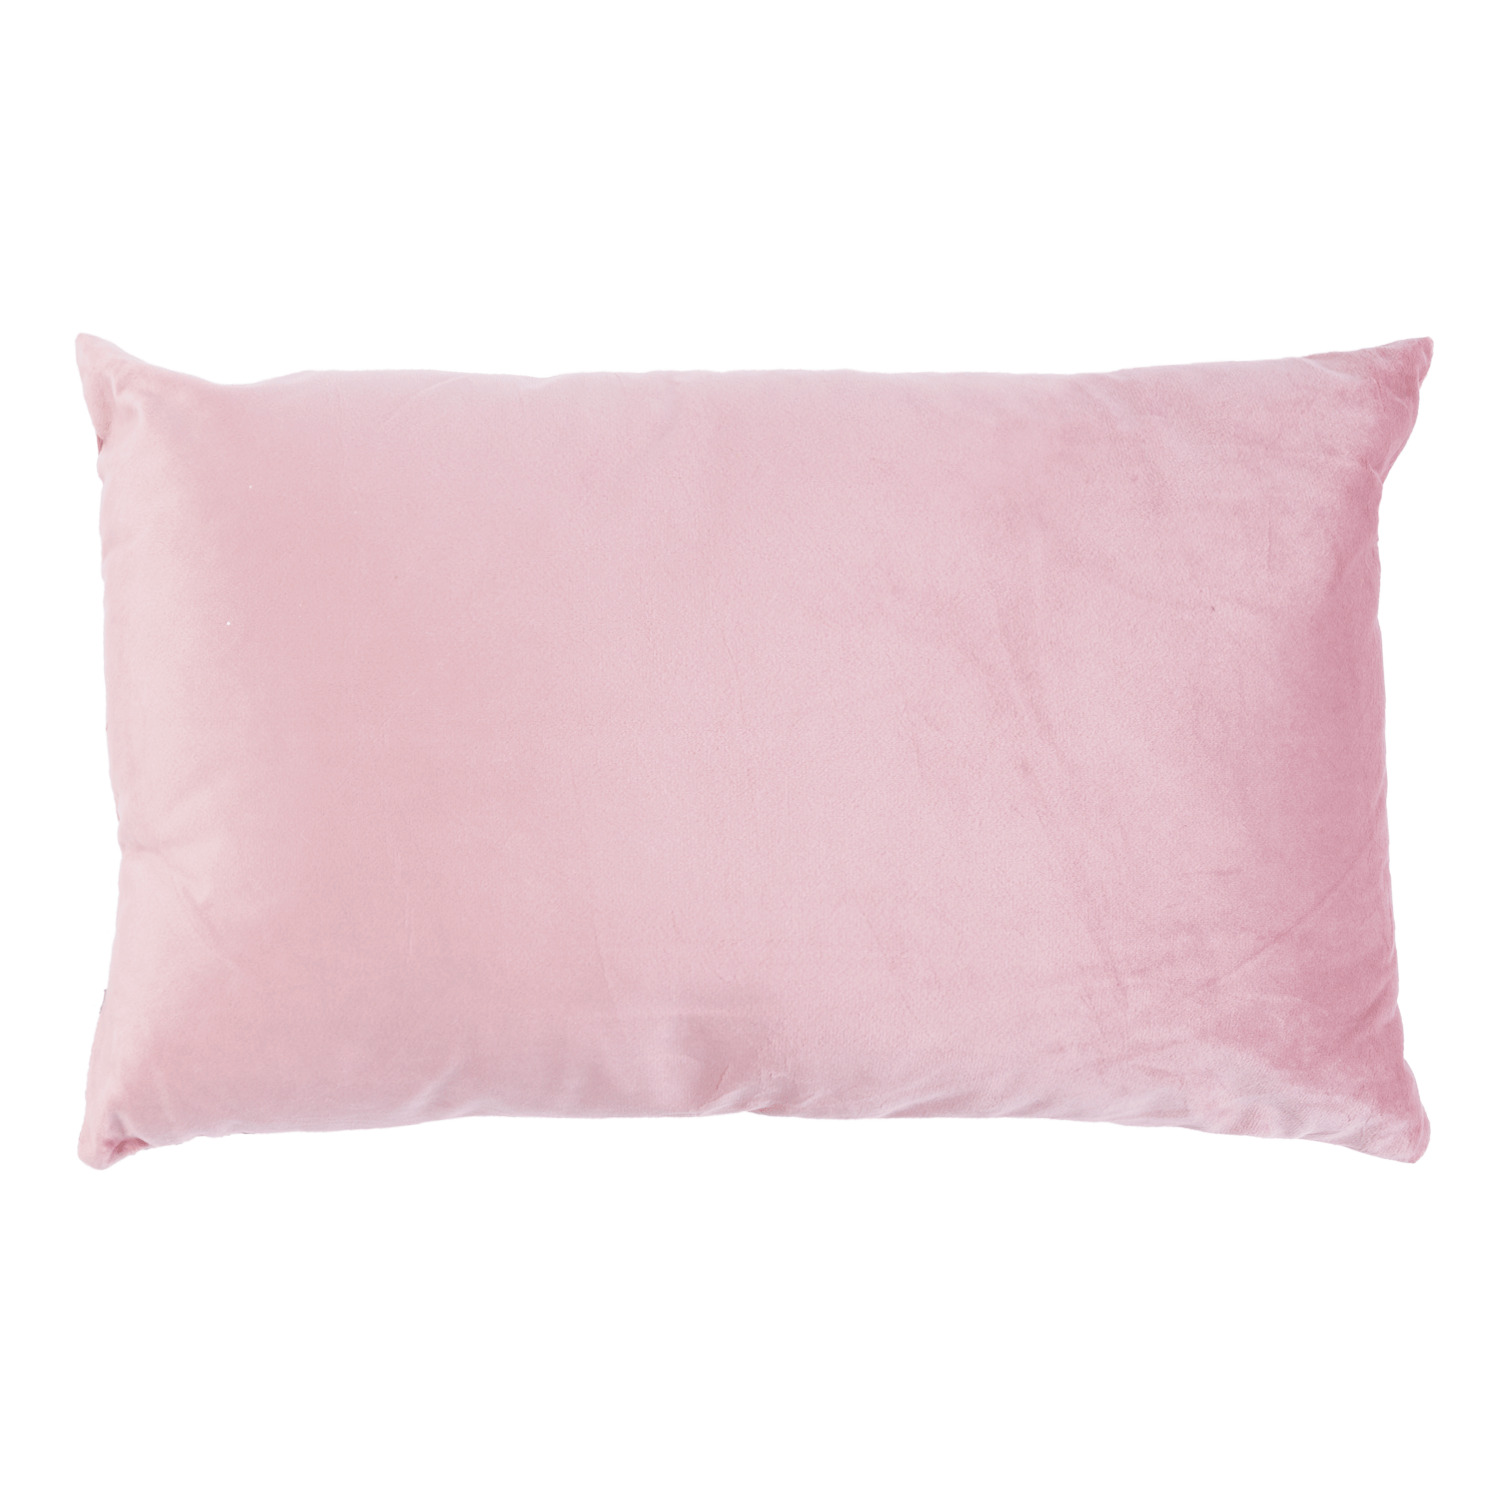 Velvet lumbar cushion, 12"x20"